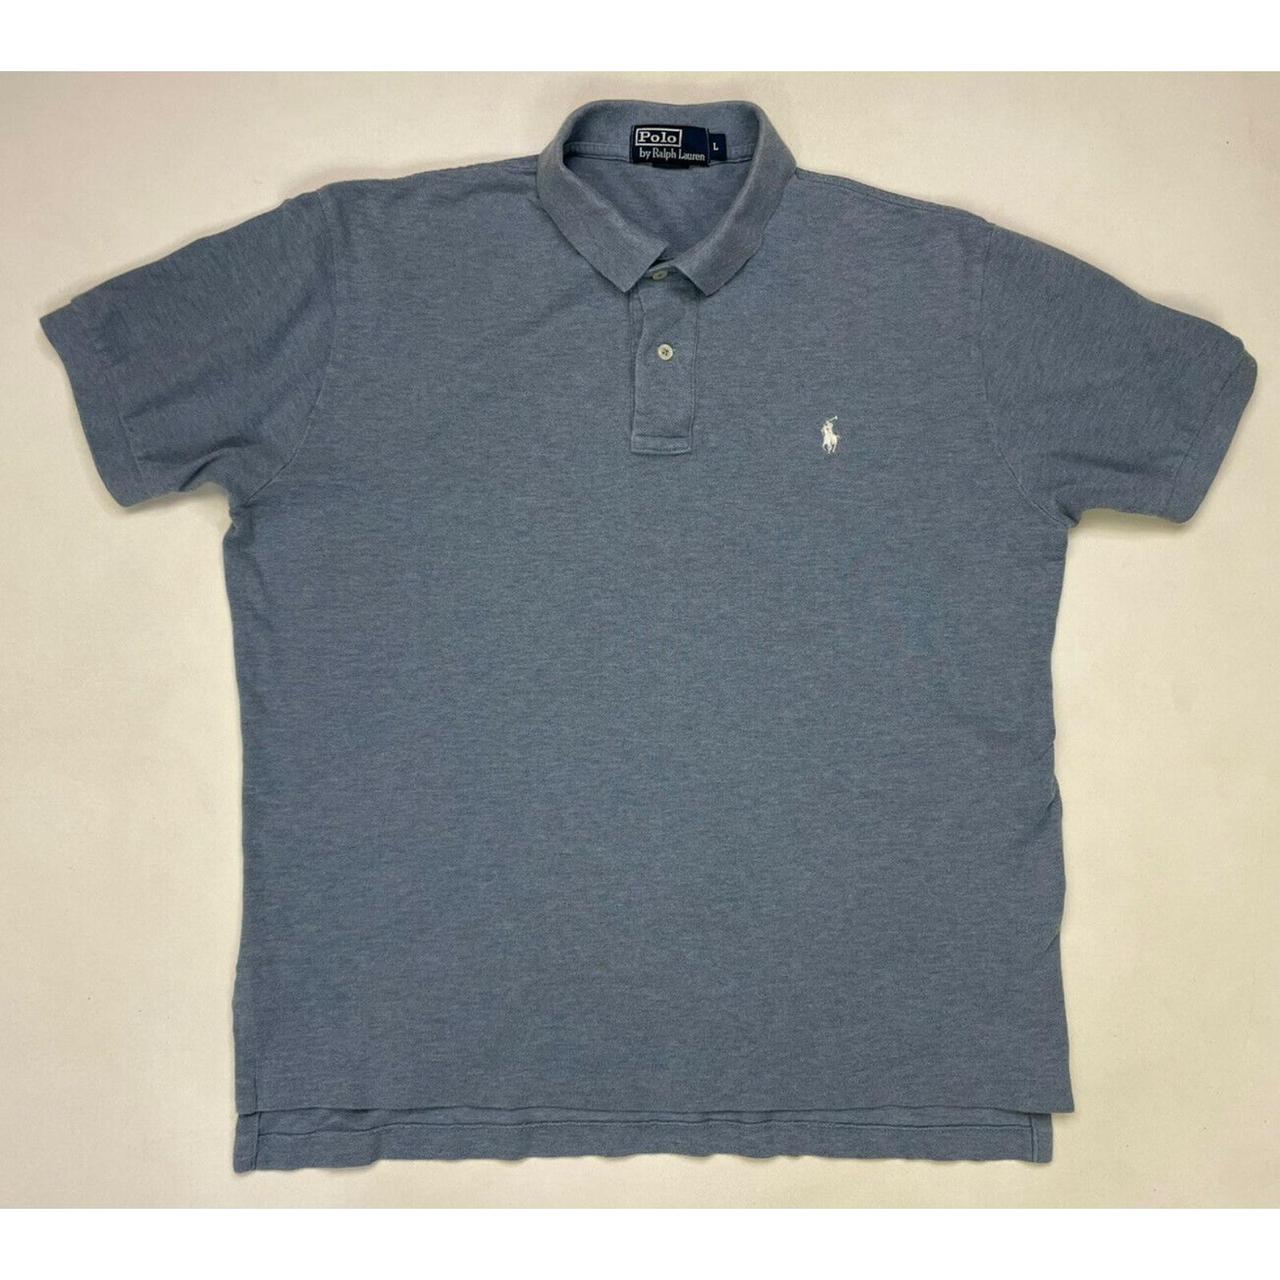 Product Image 1 - Polo Ralph Lauren Polo Shirt